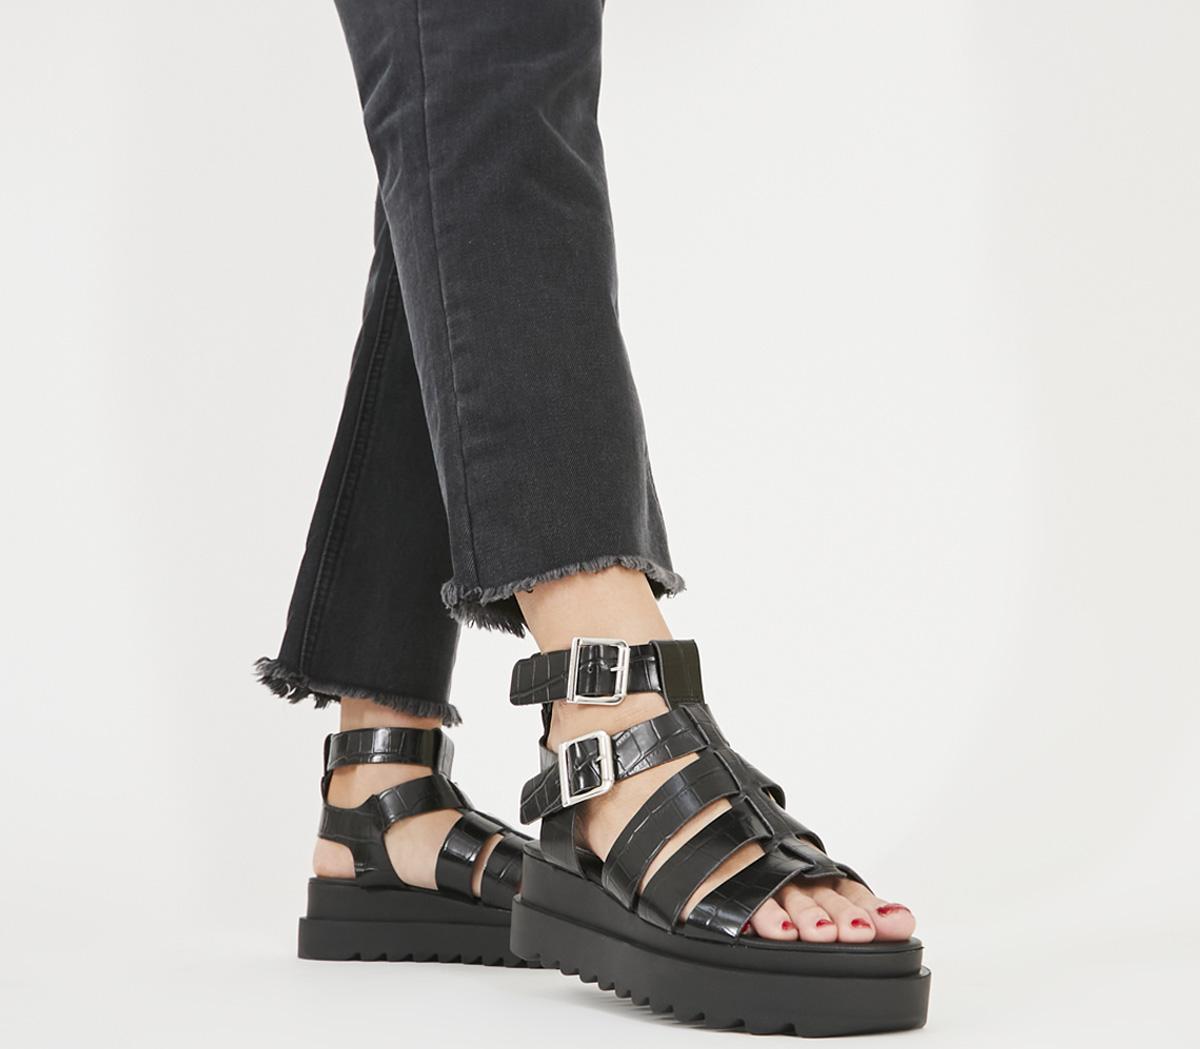 Audrey Brooke tan leather gladiator heeled sandals | Gladiator sandals heels,  Gladiator heels, Leather gladiators